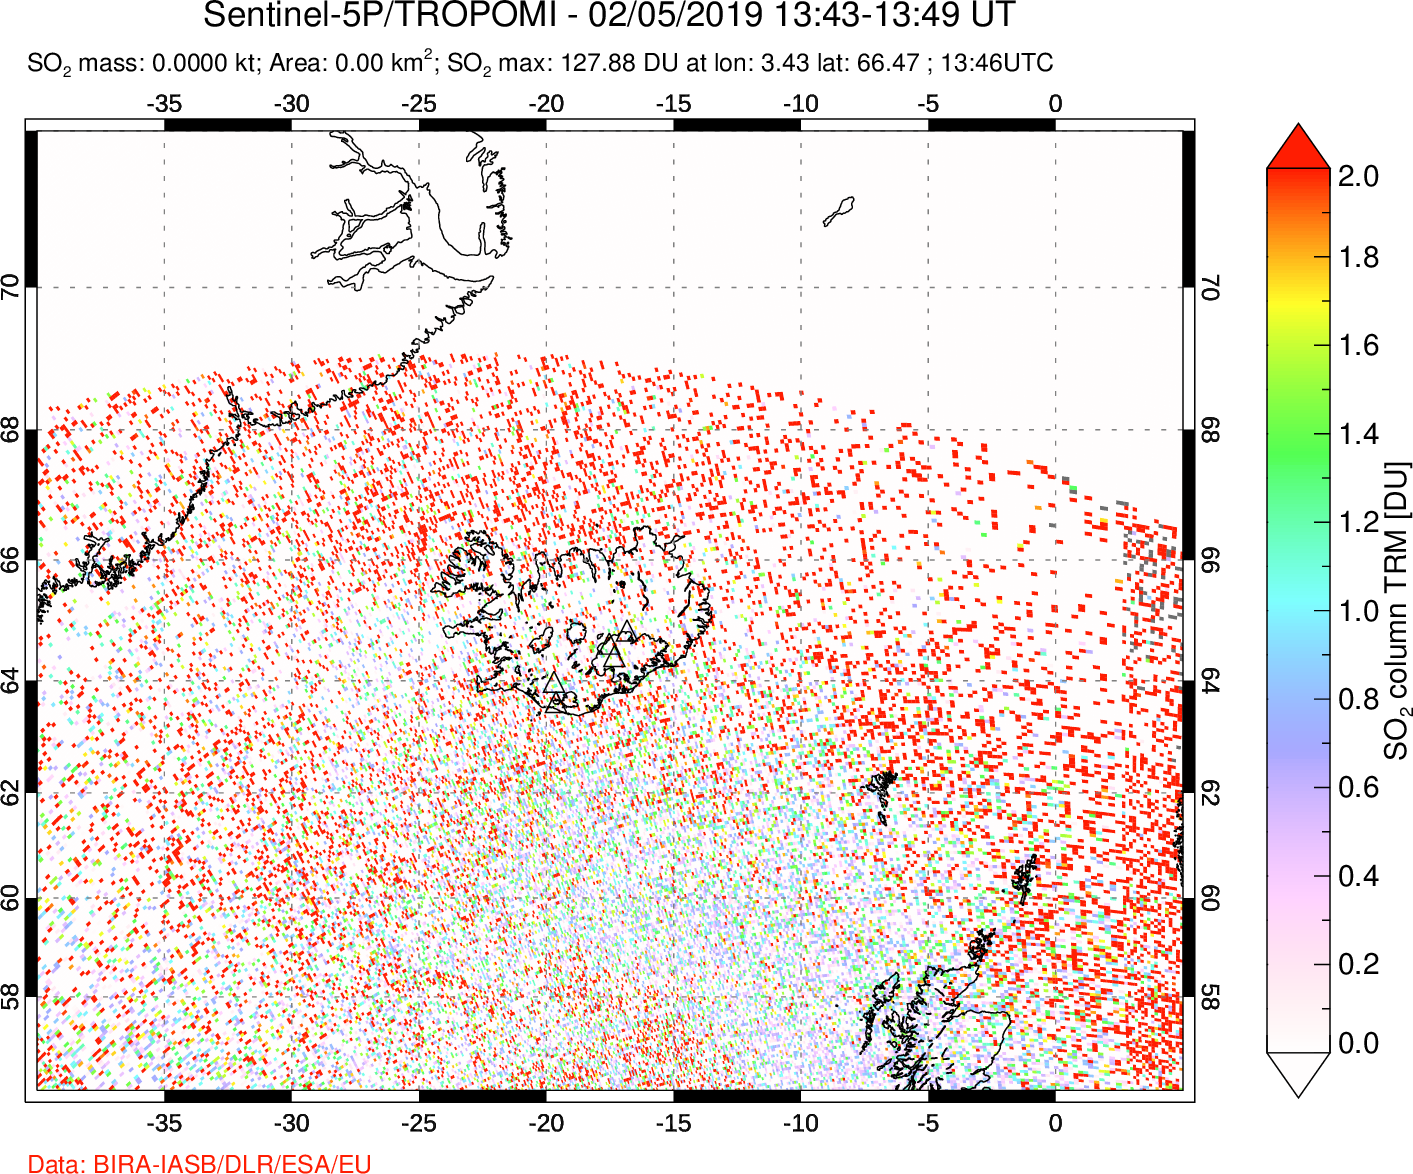 A sulfur dioxide image over Iceland on Feb 05, 2019.